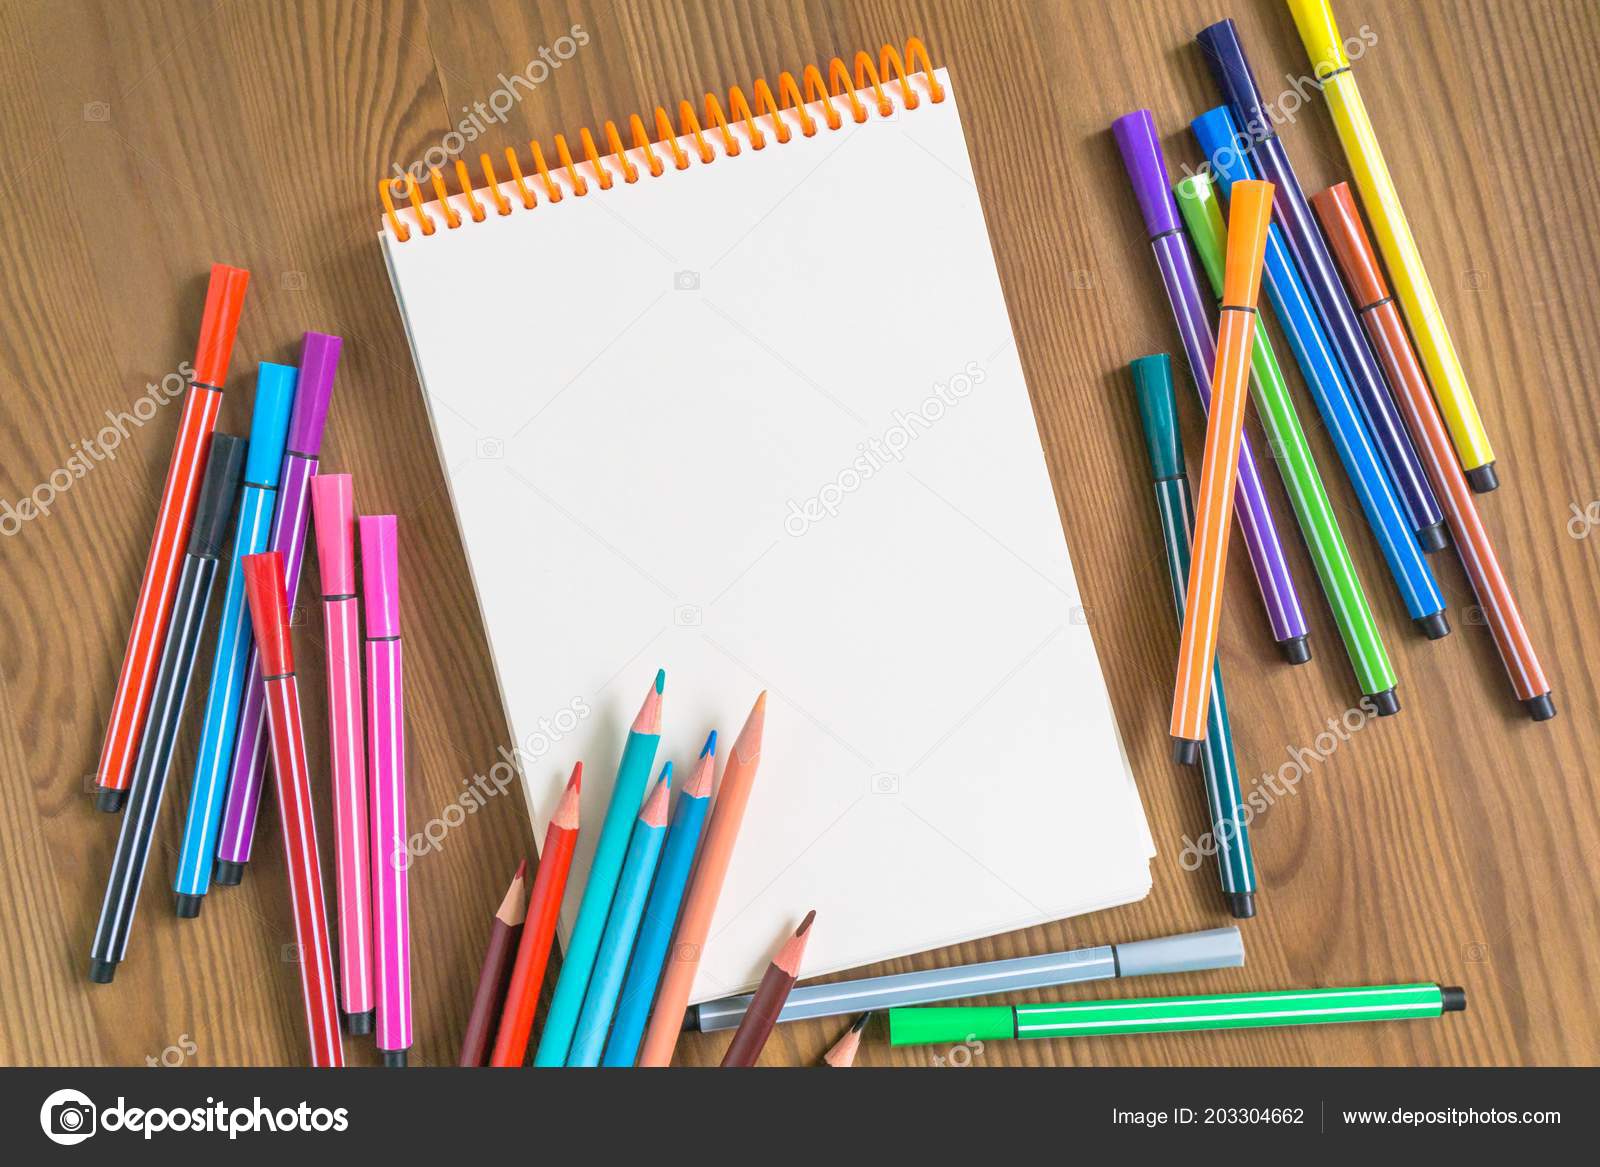 https://st4.depositphotos.com/2018293/20330/i/1600/depositphotos_203304662-stock-photo-bright-multicolored-pencils-markers-next.jpg